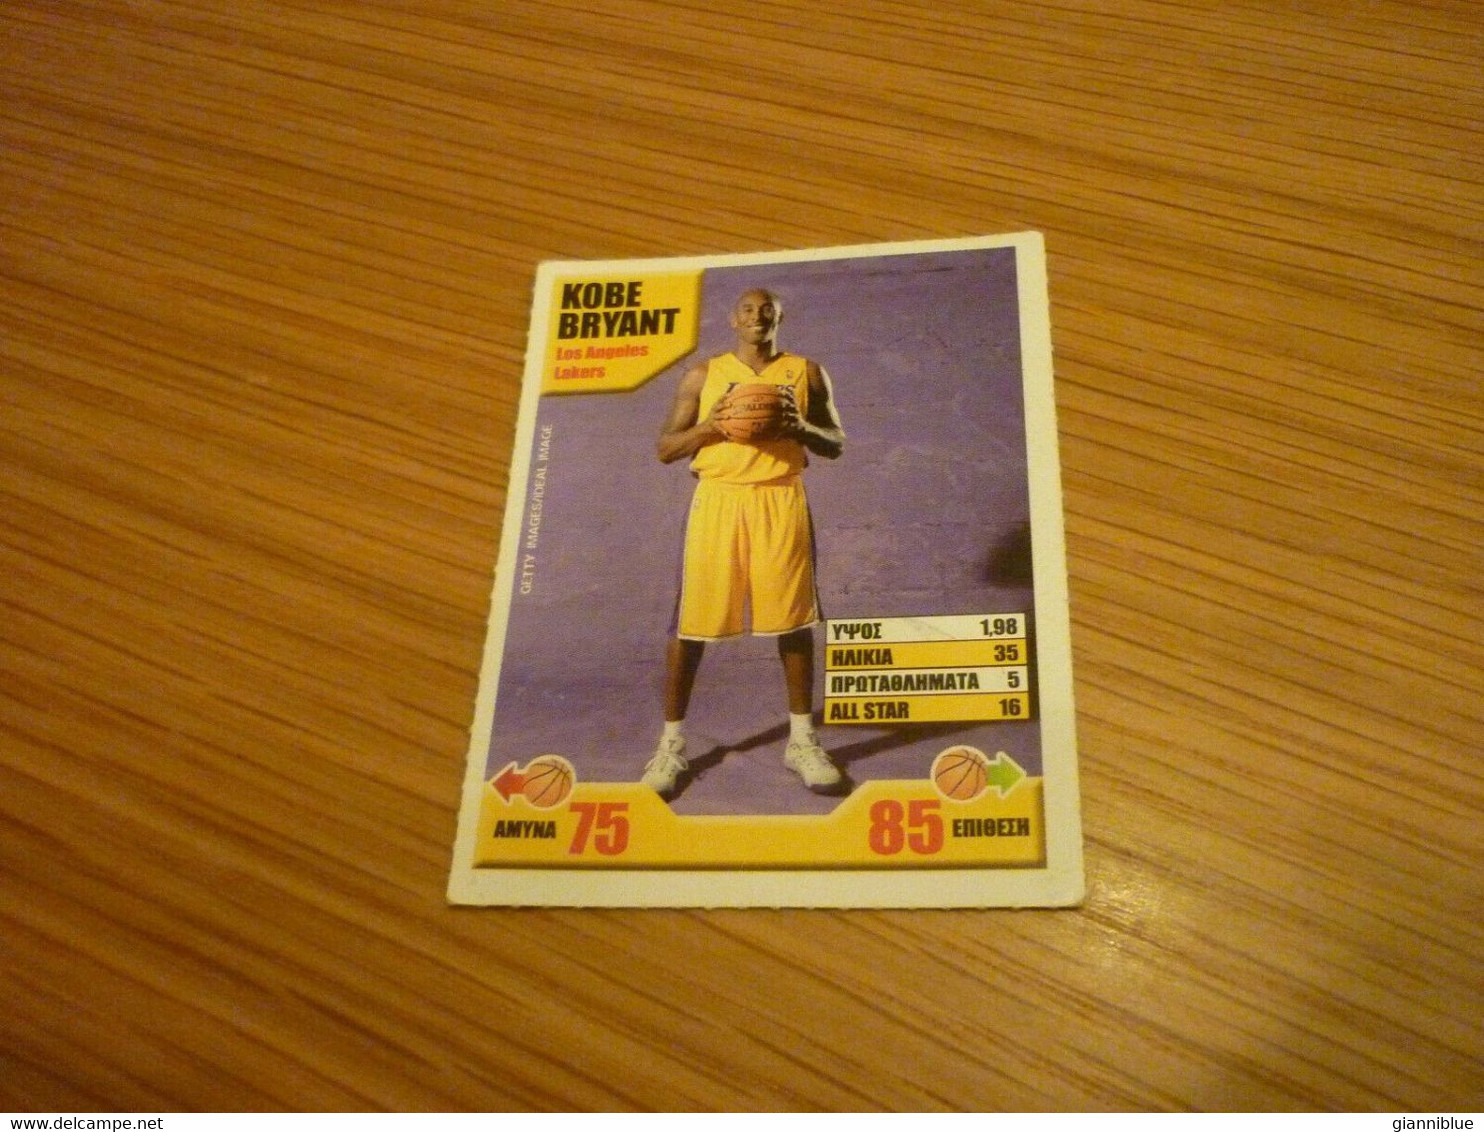 Kobe Bryant Los Angeles Lakers NBA Basketball Star Greek Edition Rare Trading Card - 1990-1999